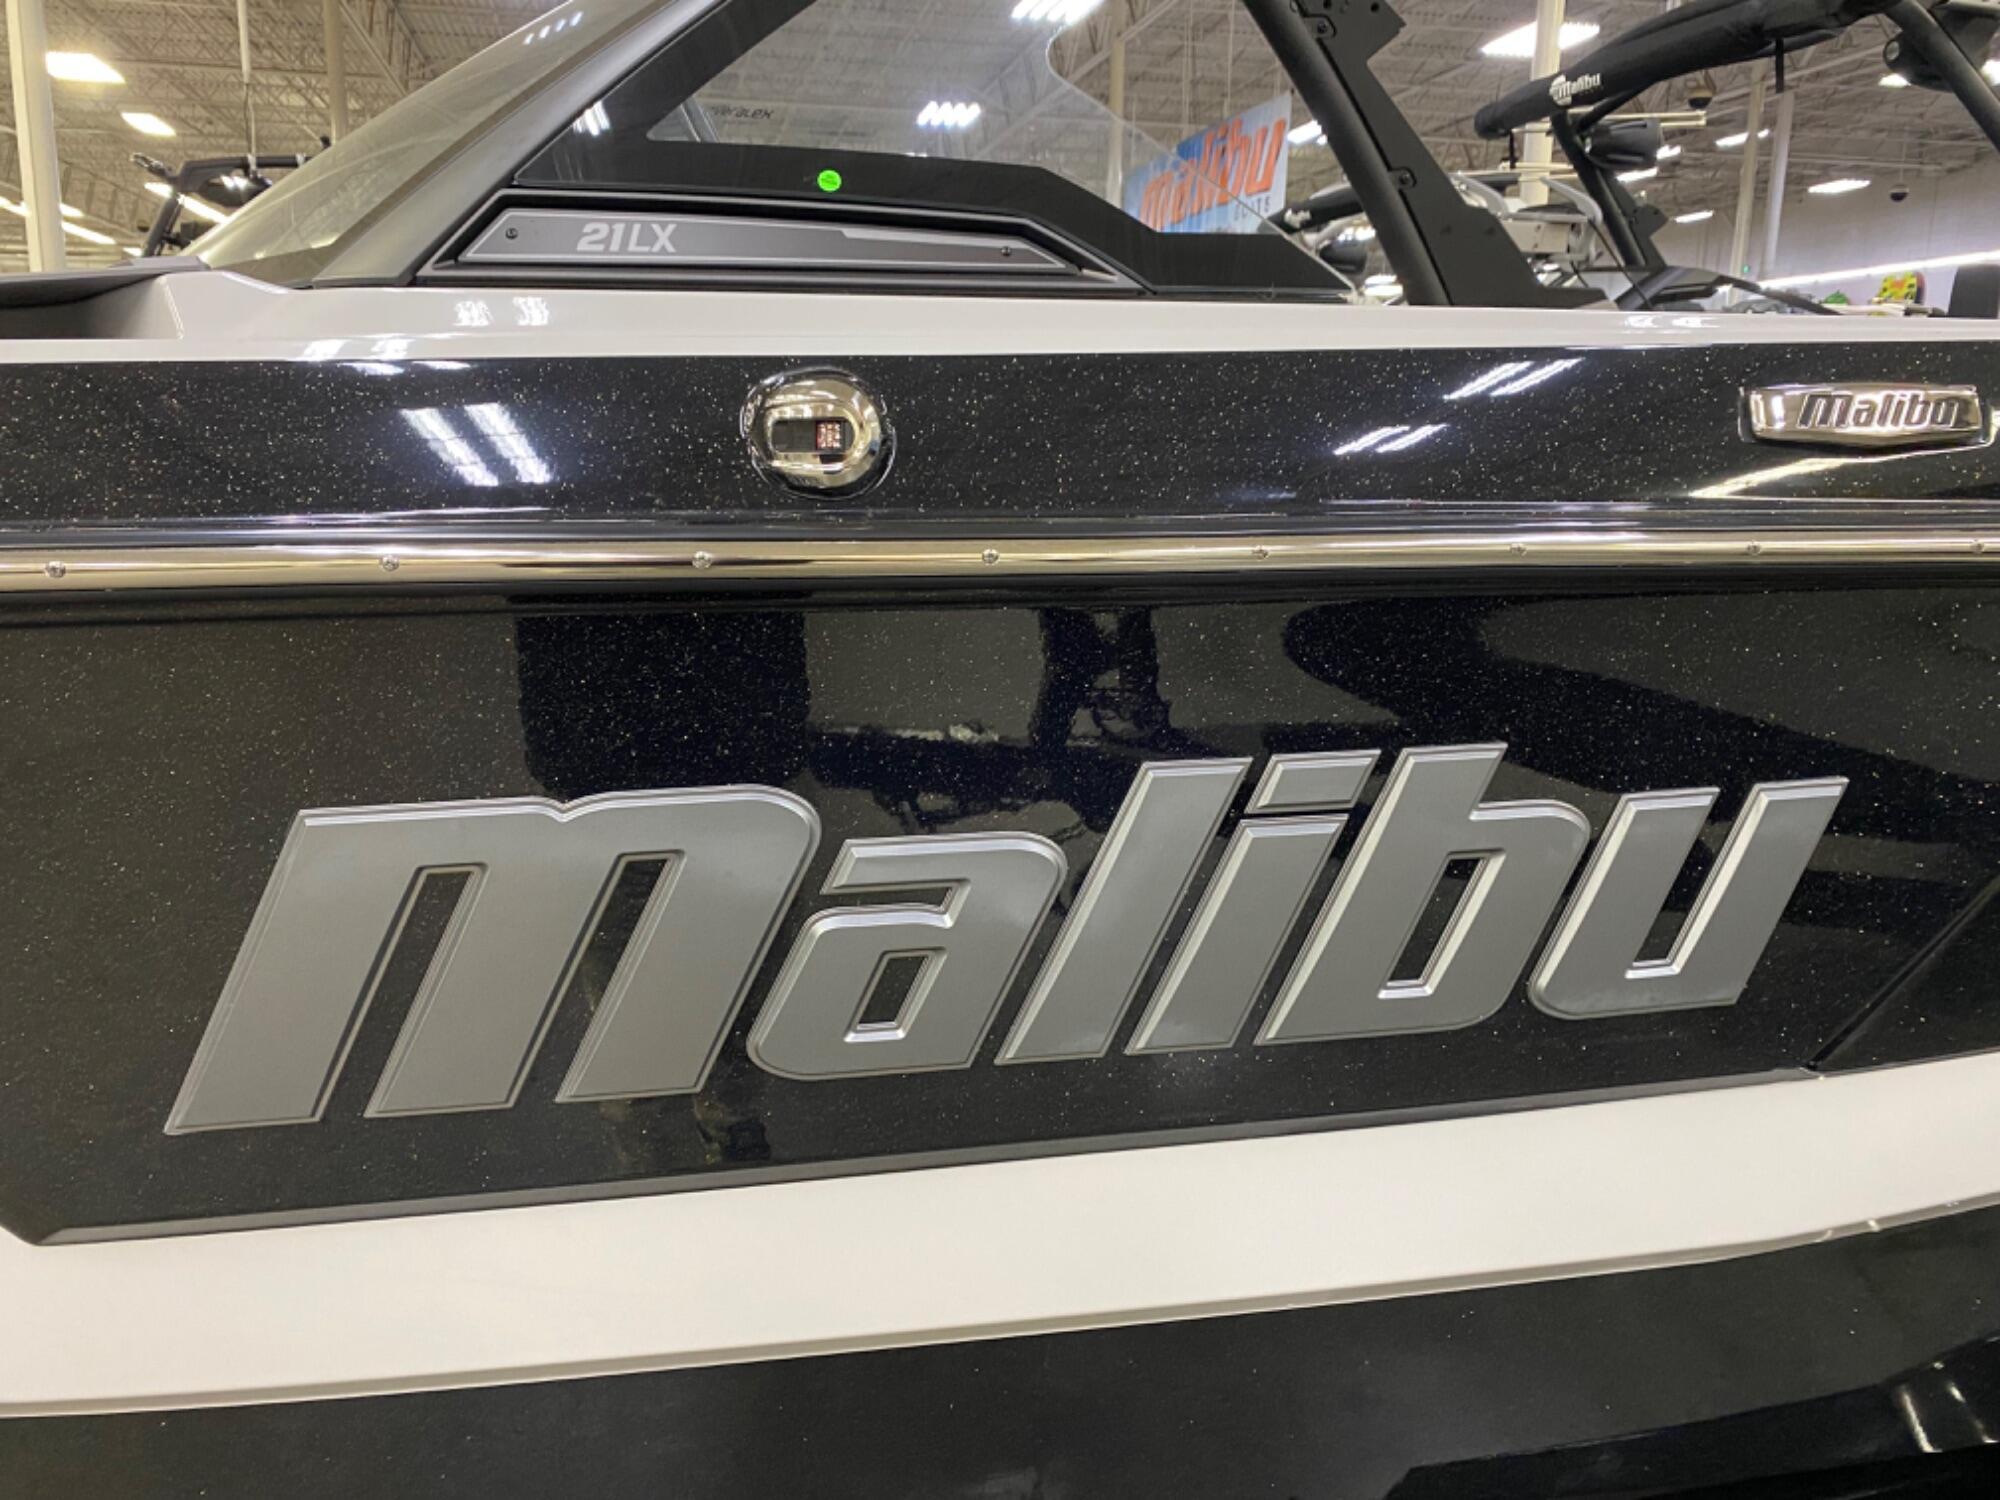 2023 Malibu 21 LX